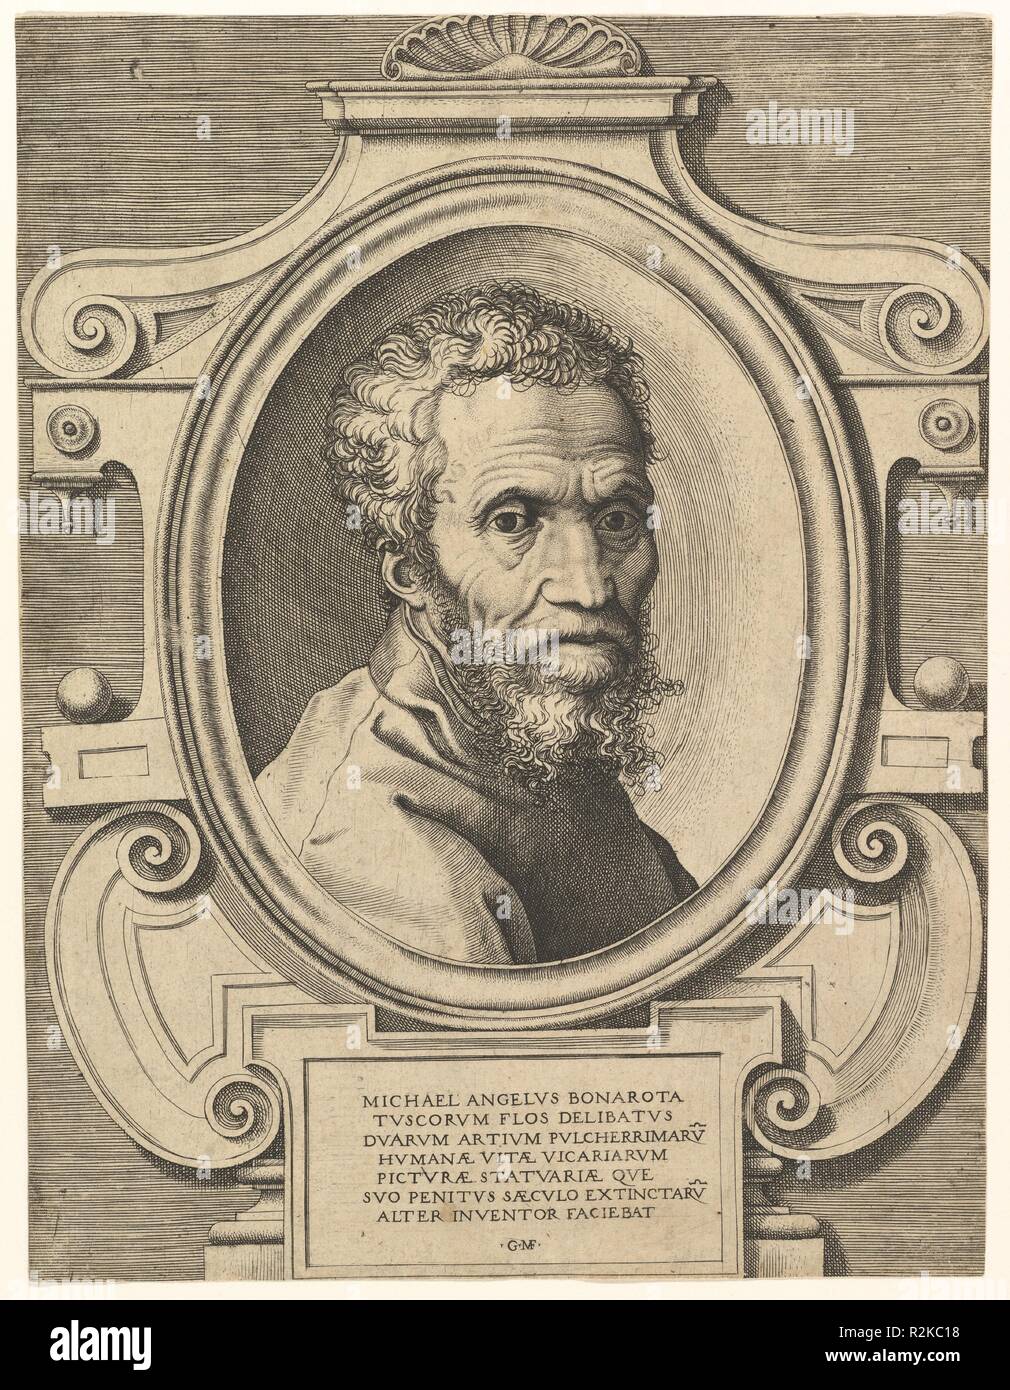 Portrait of Michelangelo. Artist: Engraved by Giorgio Ghisi (Italian, Mantua ca. 1520-1582 Mantua); After painting by Marcello Venusti (Italian, Mazzo di Valtellina (Sondrio) ca. 1512-1579 Rome). Dimensions: sheet: 10 3/16 x 7 11/16 in. (25.9 x 19.6 cm) borderline/sheet. Date: after 1564. Museum: Metropolitan Museum of Art, New York, USA. Stock Photo